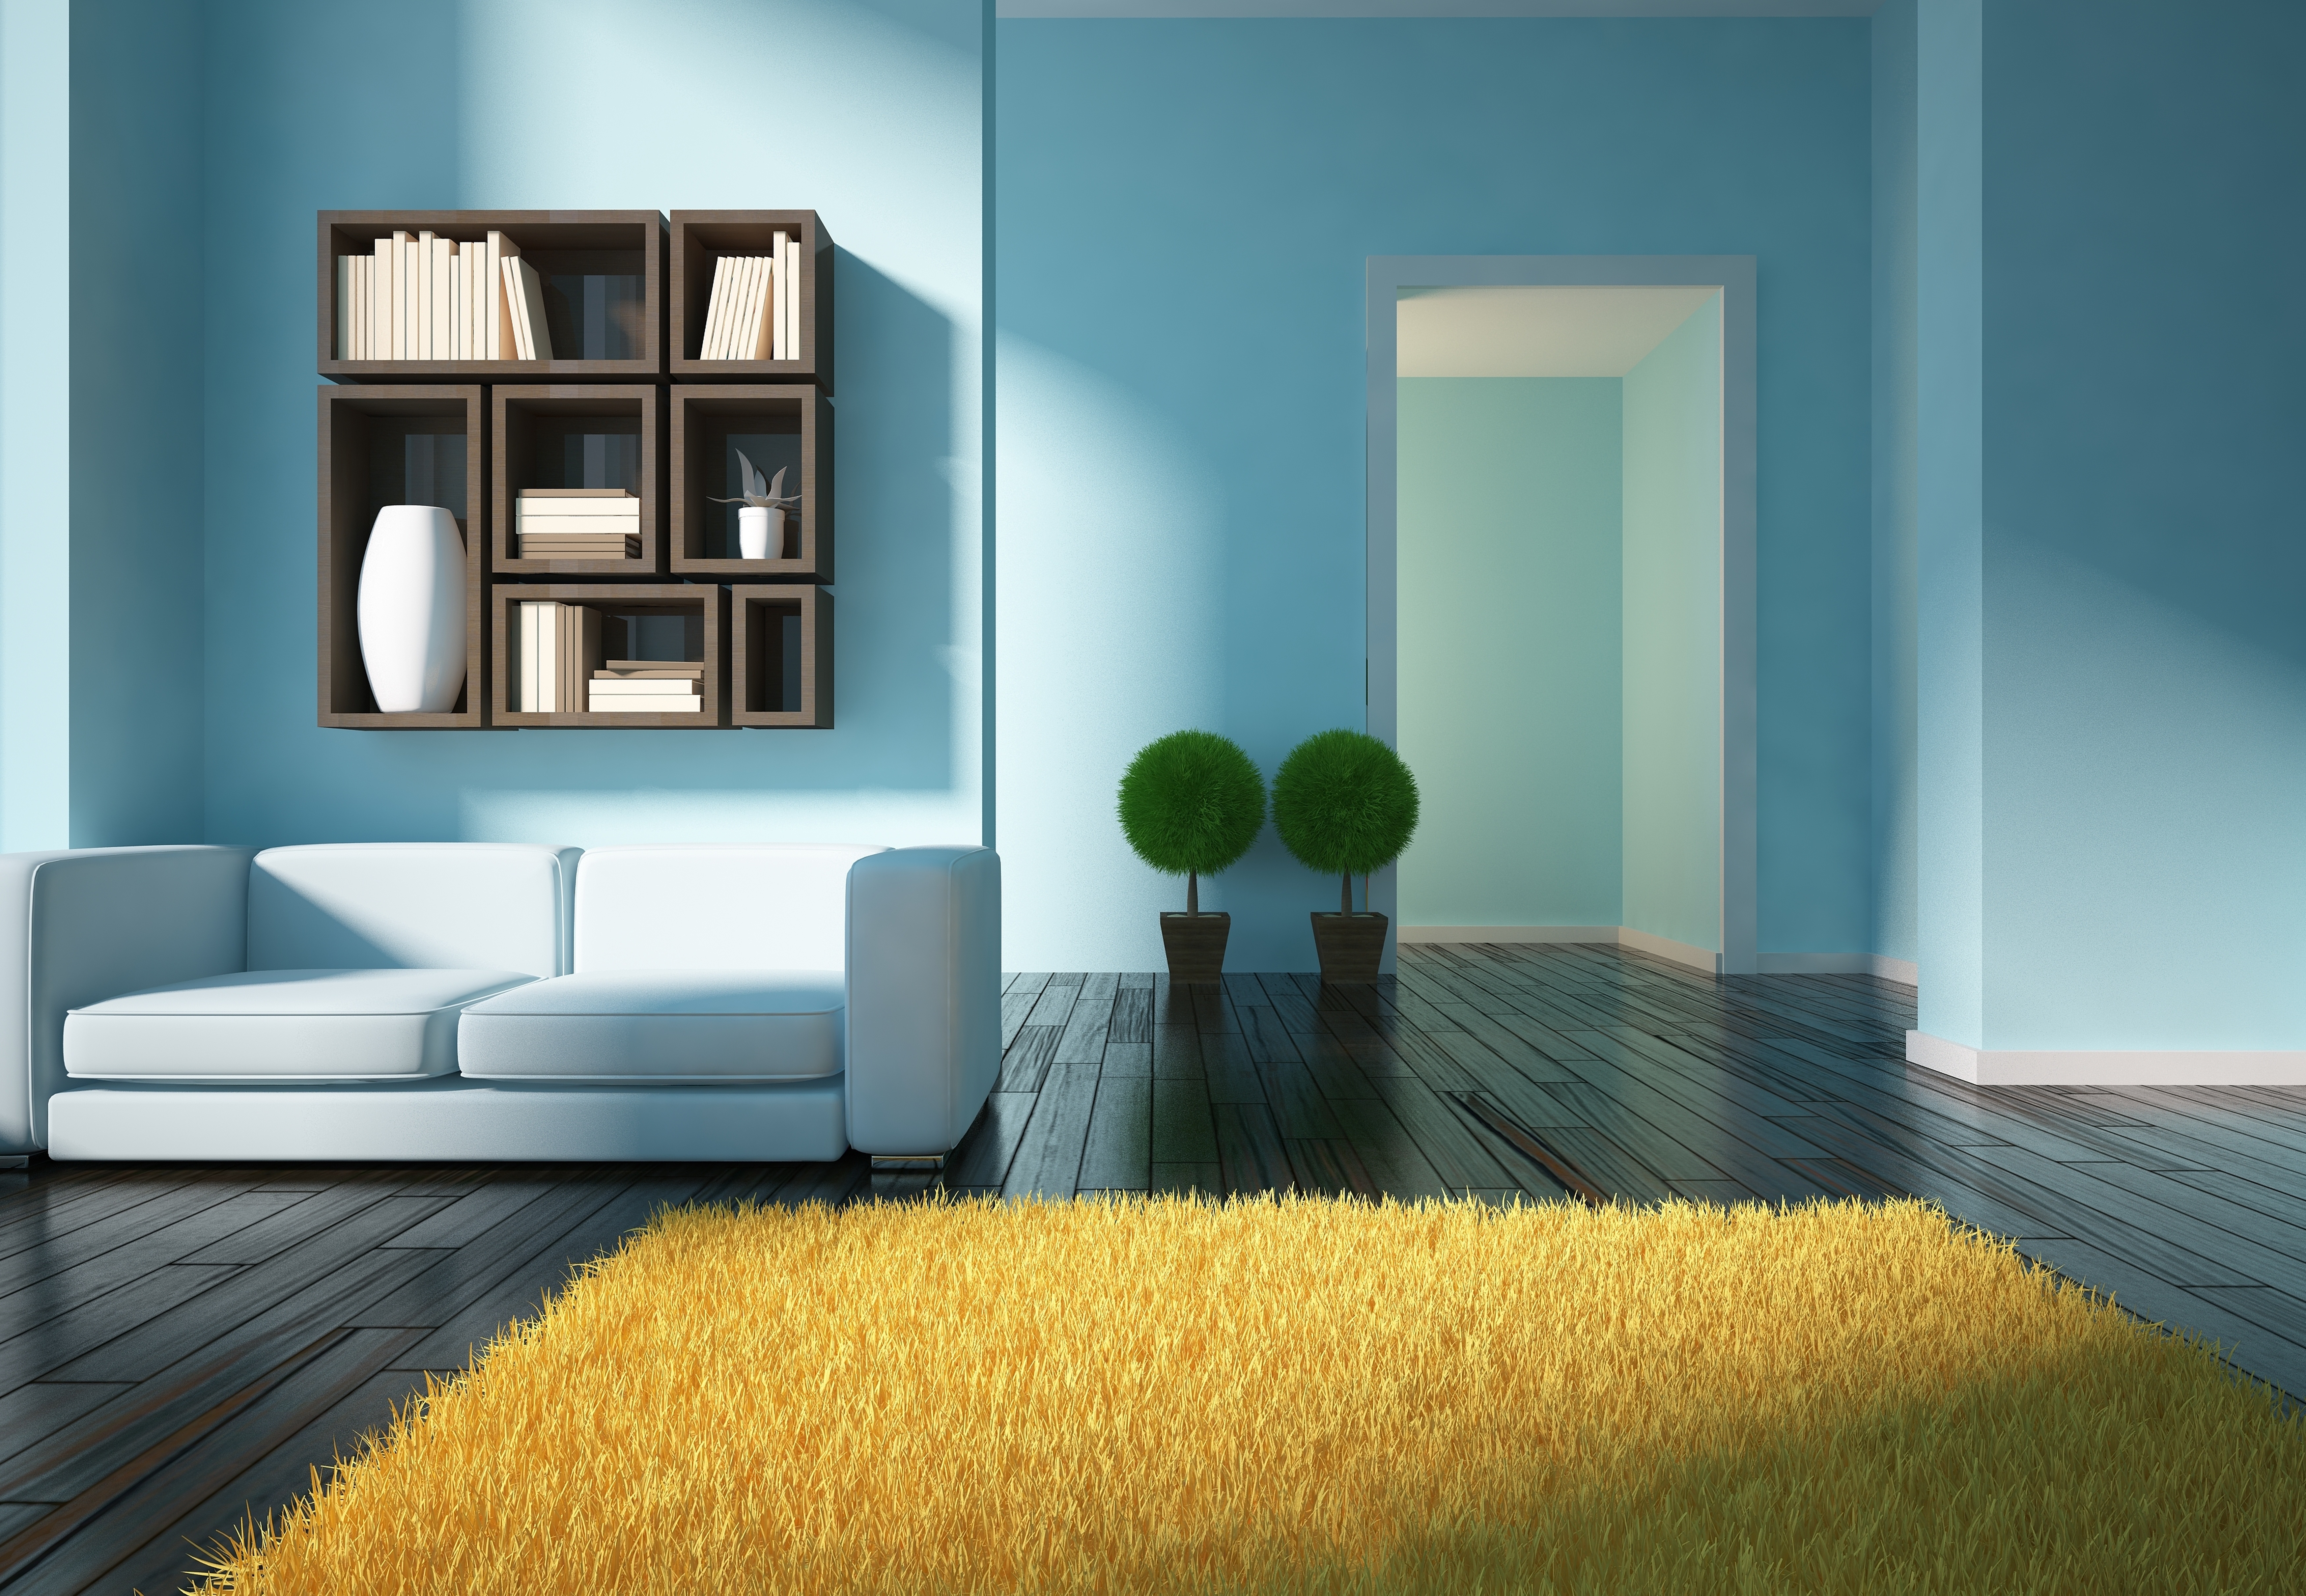 General 7000x4846 room interior wooden surface carpet minimalism bookshelves CGI